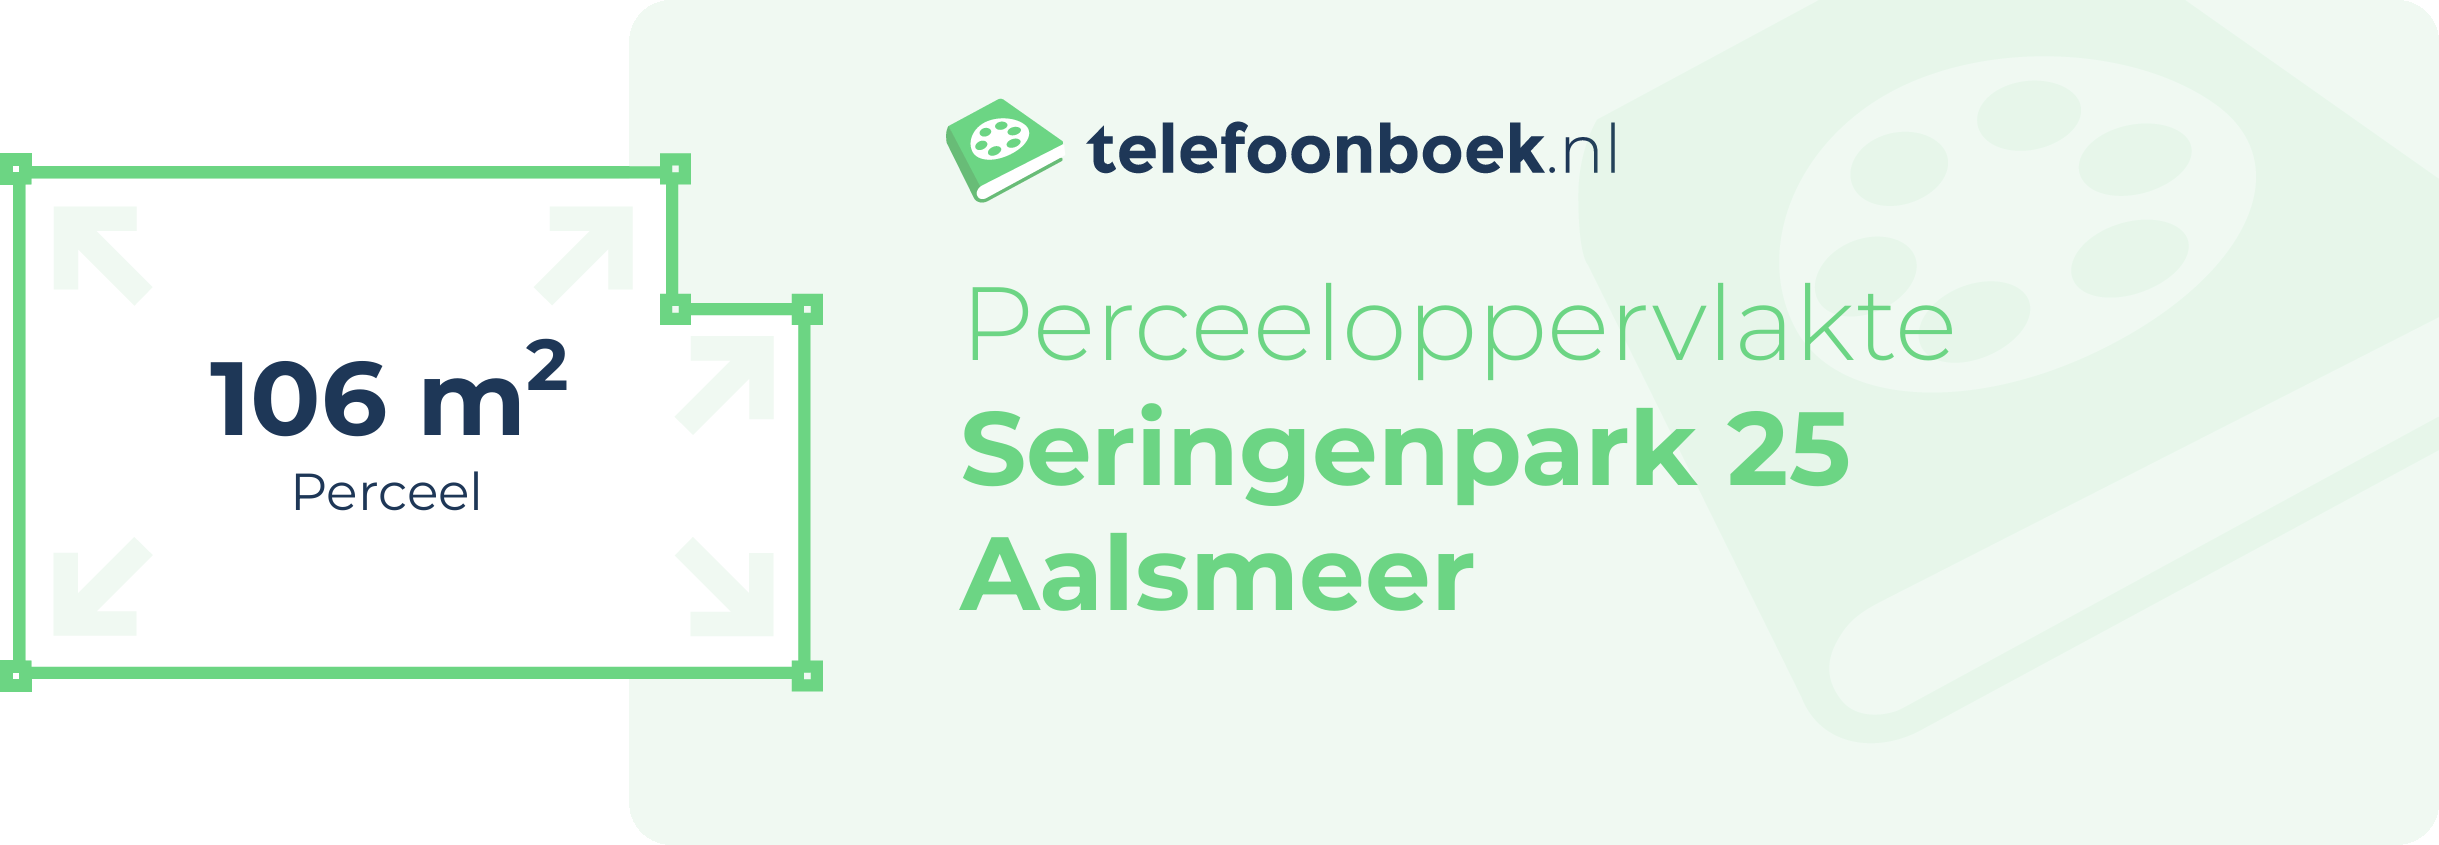 Perceeloppervlakte Seringenpark 25 Aalsmeer